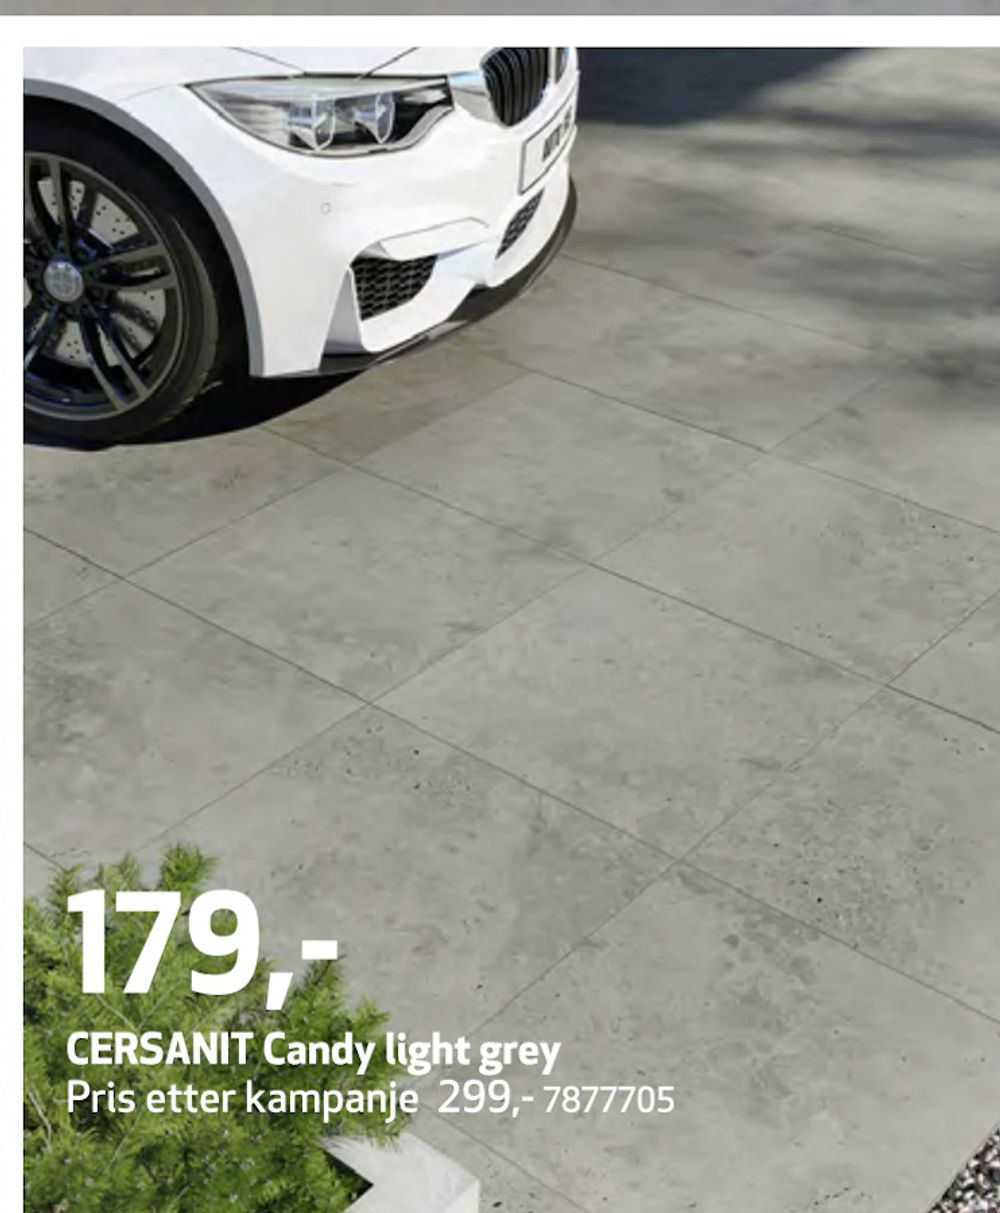 Tilbud på CERSANIT Candy light grey fra Flisekompaniet til 179 kr